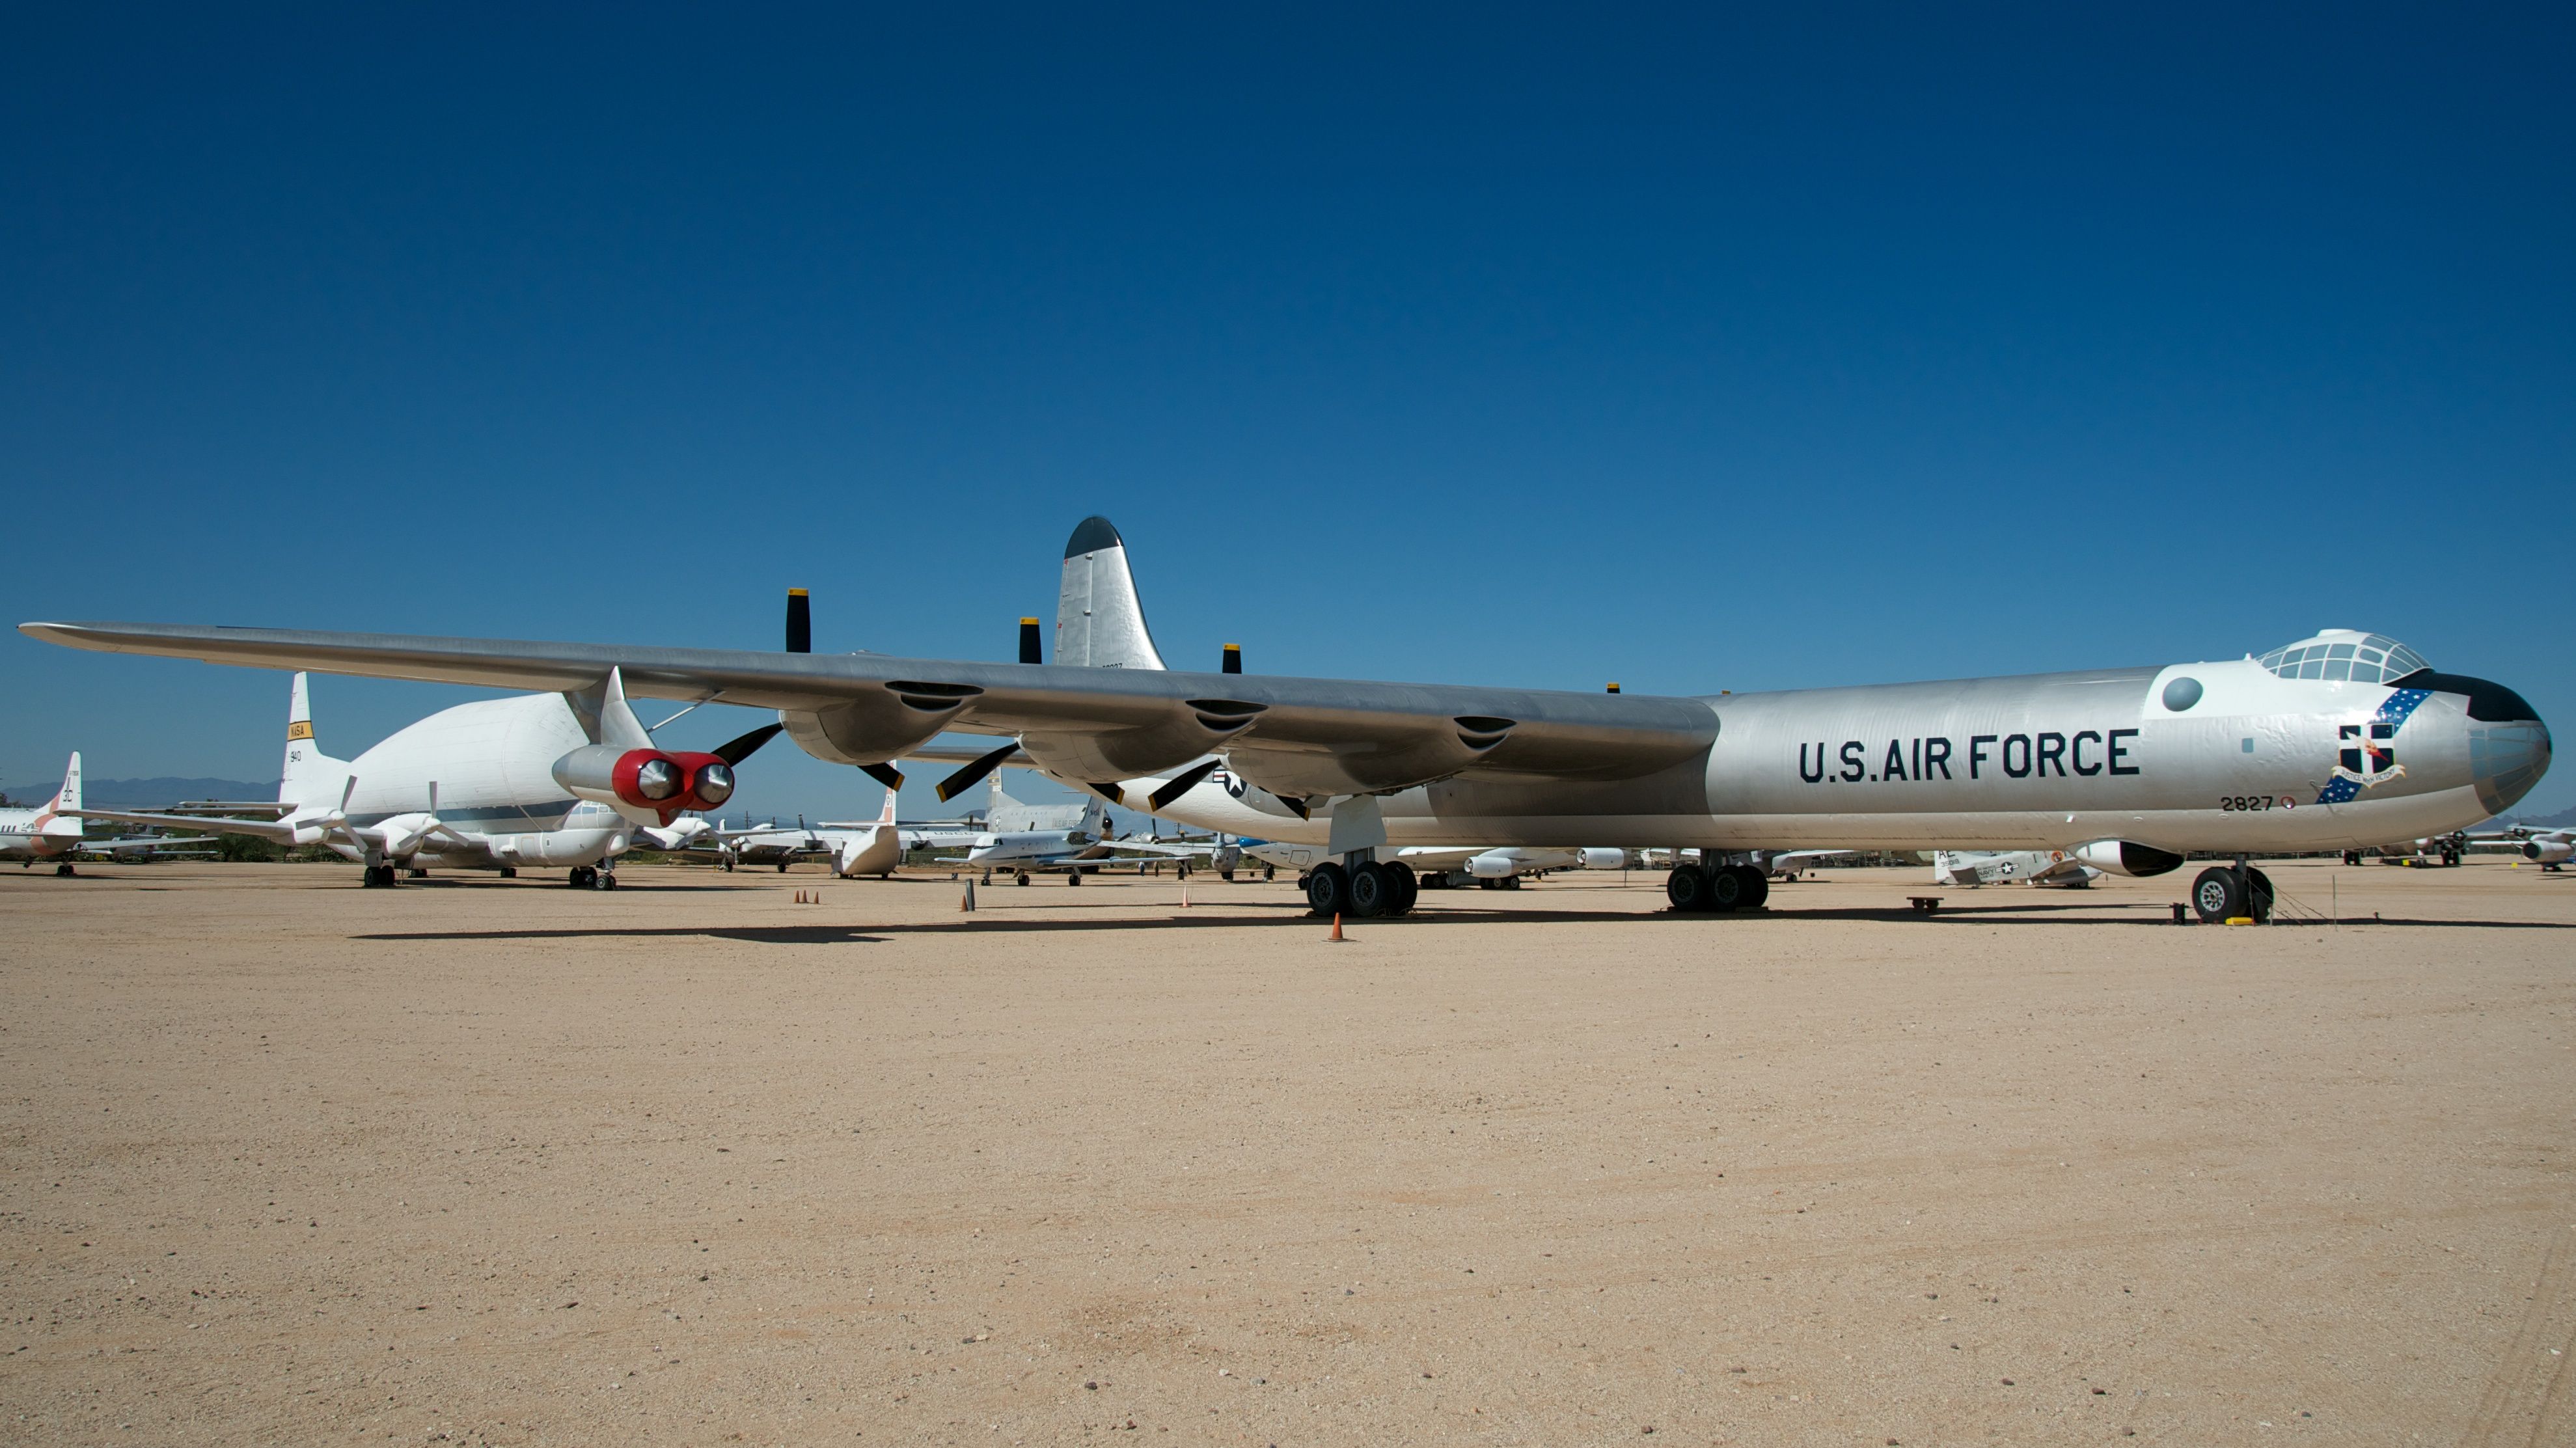 Daydream Notes: The Convair B-36 Peacemaker